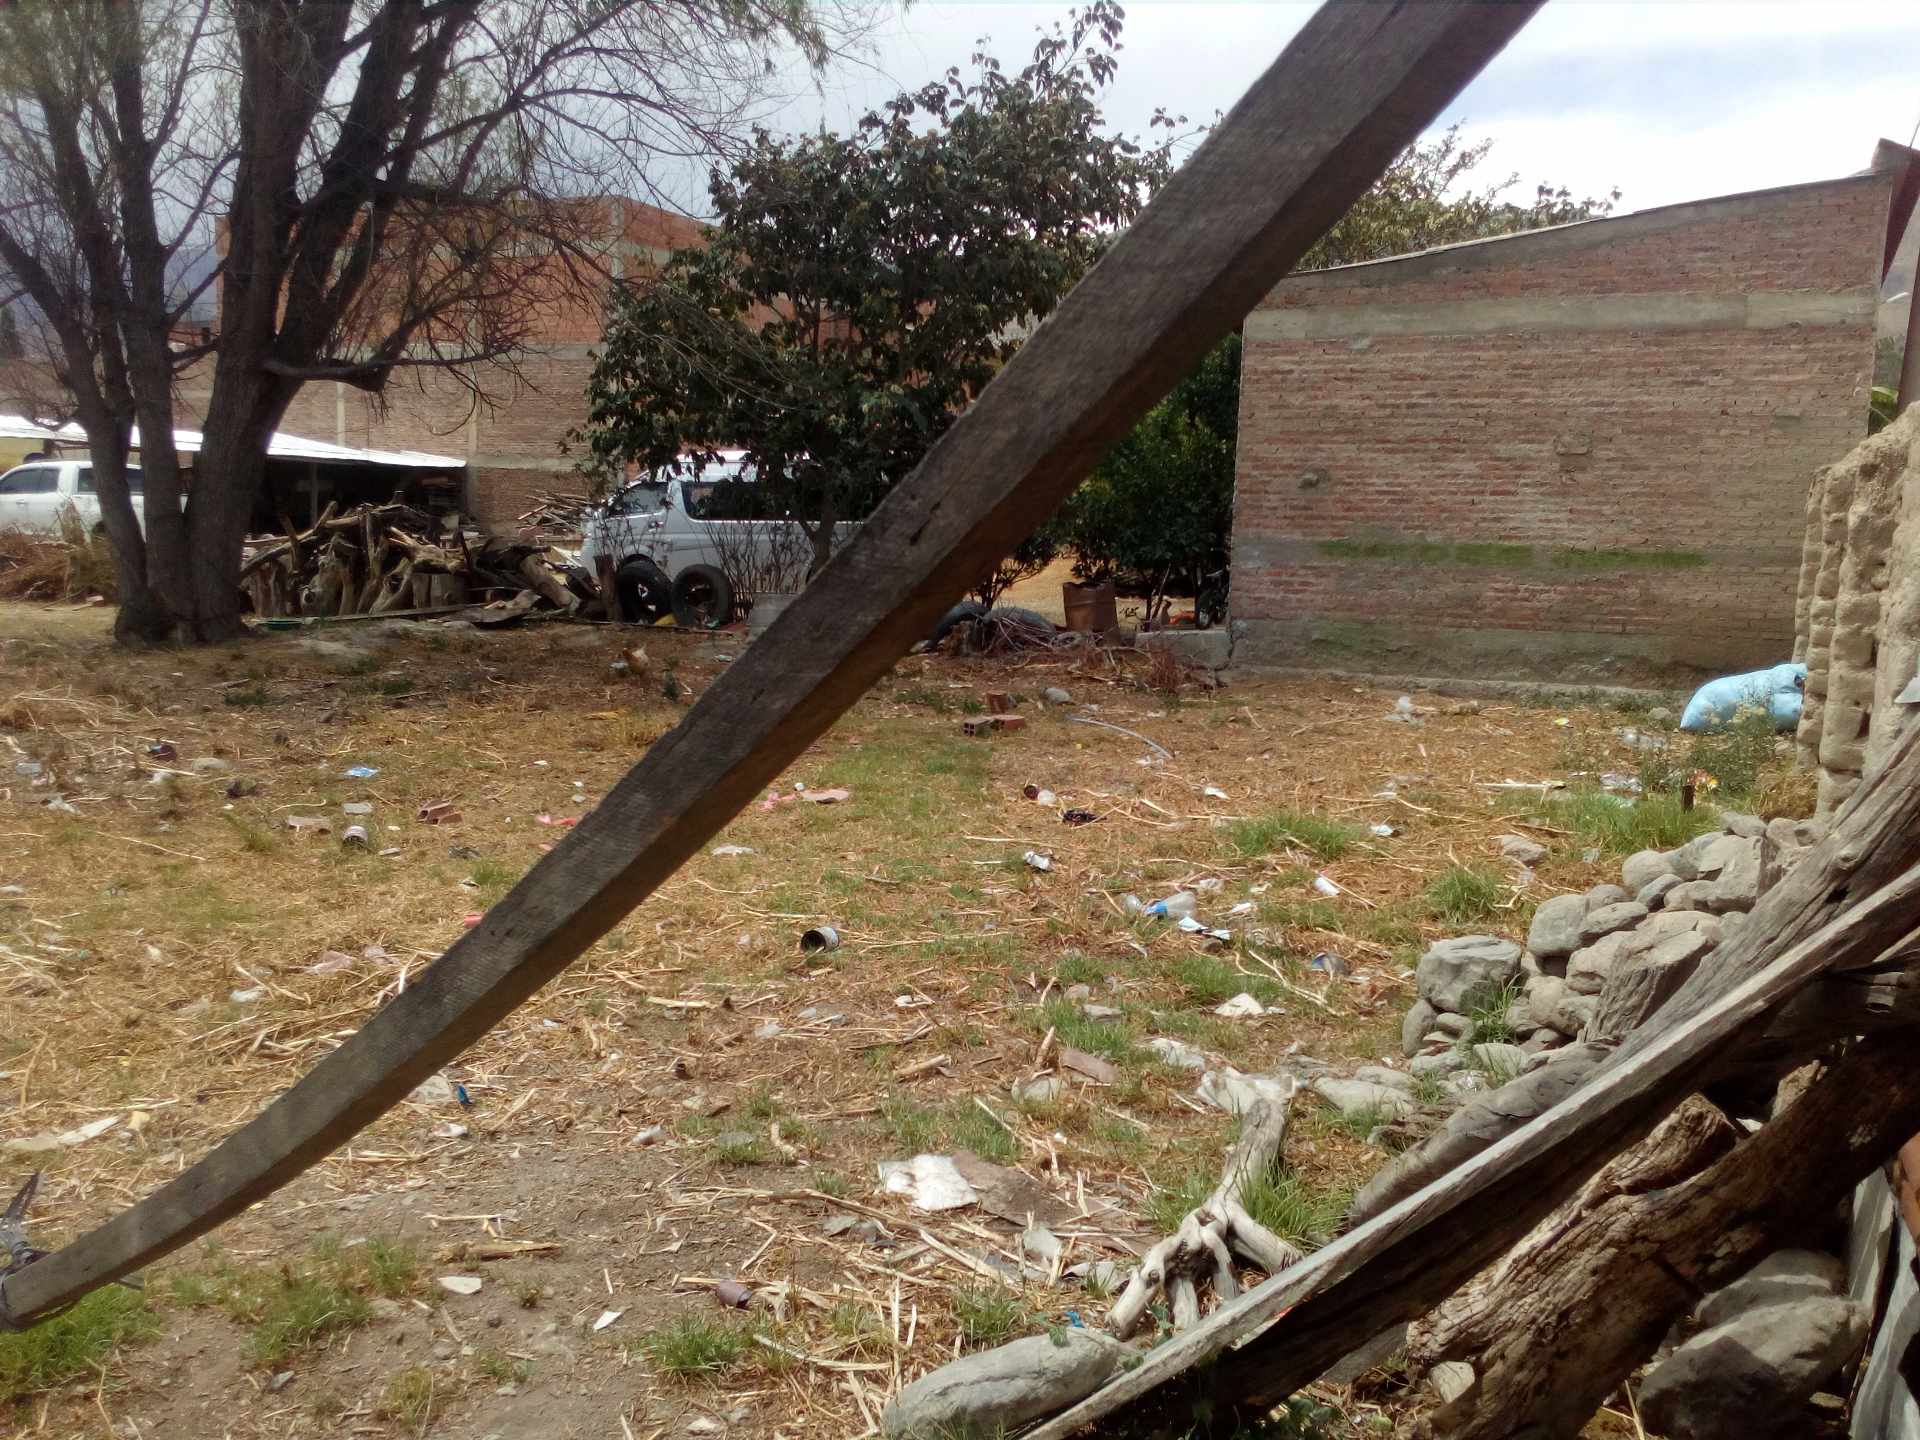 Terreno en Tiquipaya en Cochabamba    Foto 1